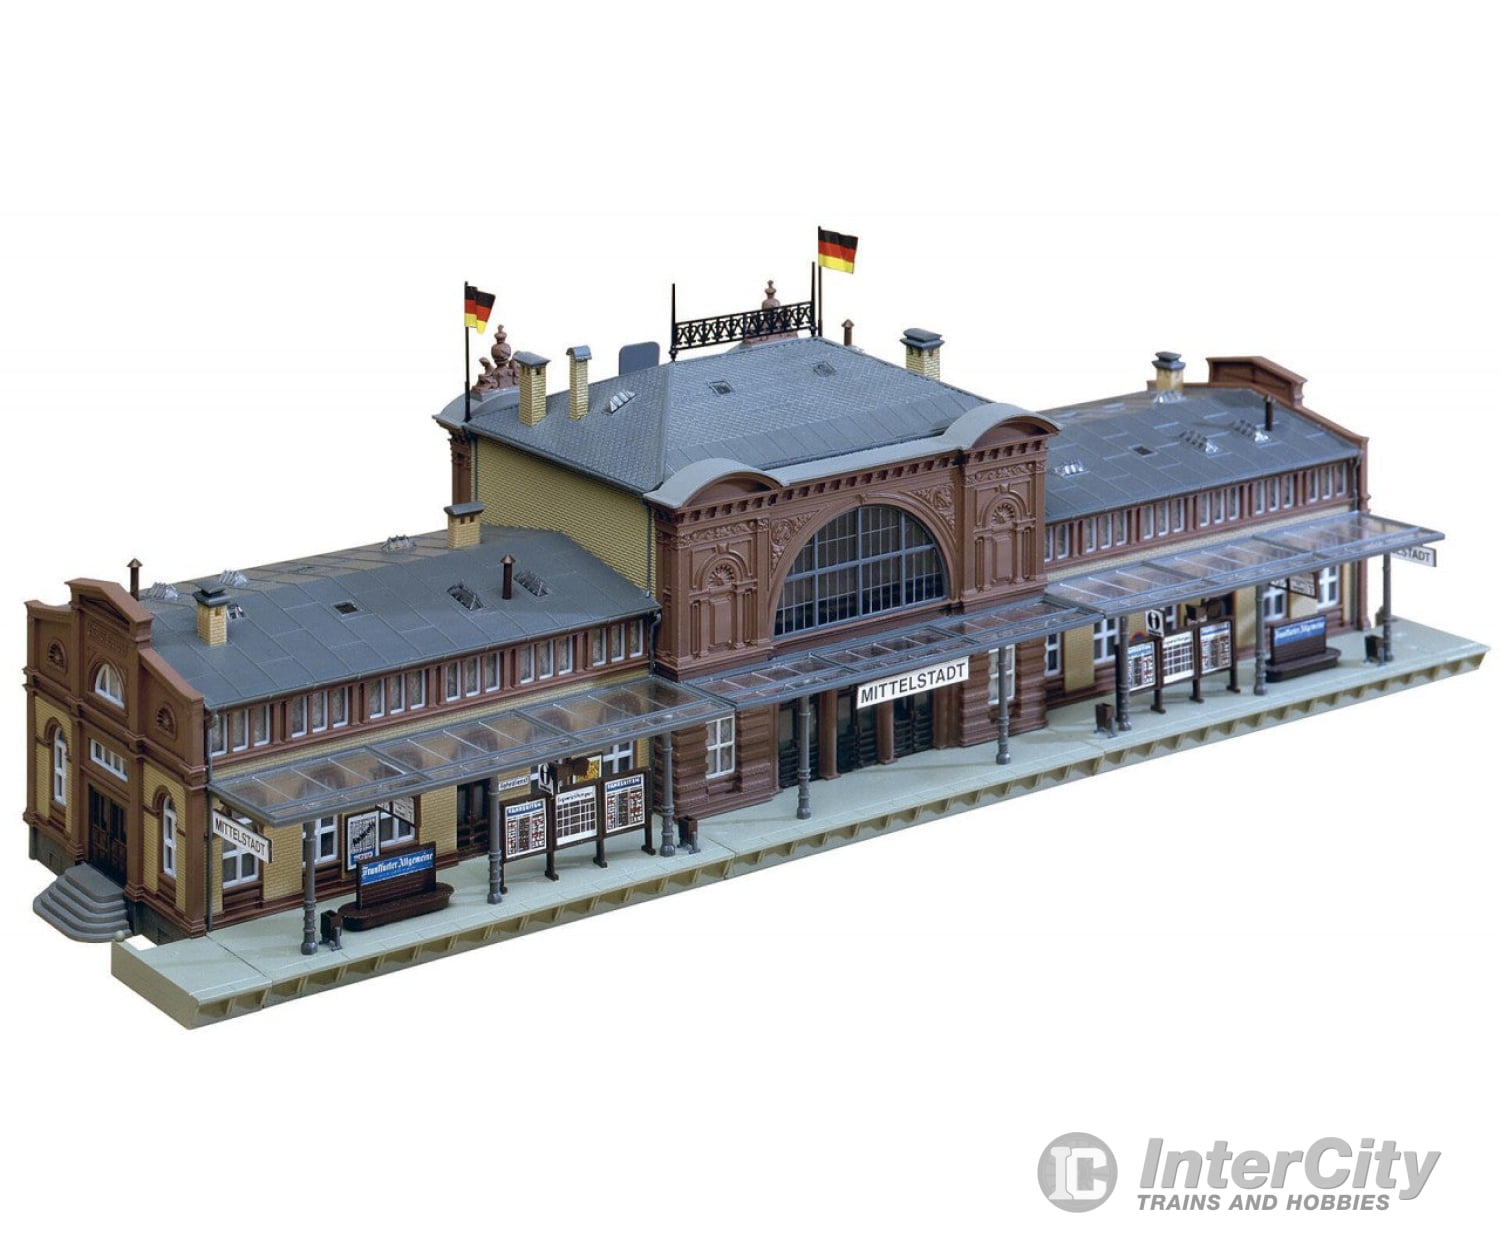 Faller 110115 H0 Mittelstadt Station Structures